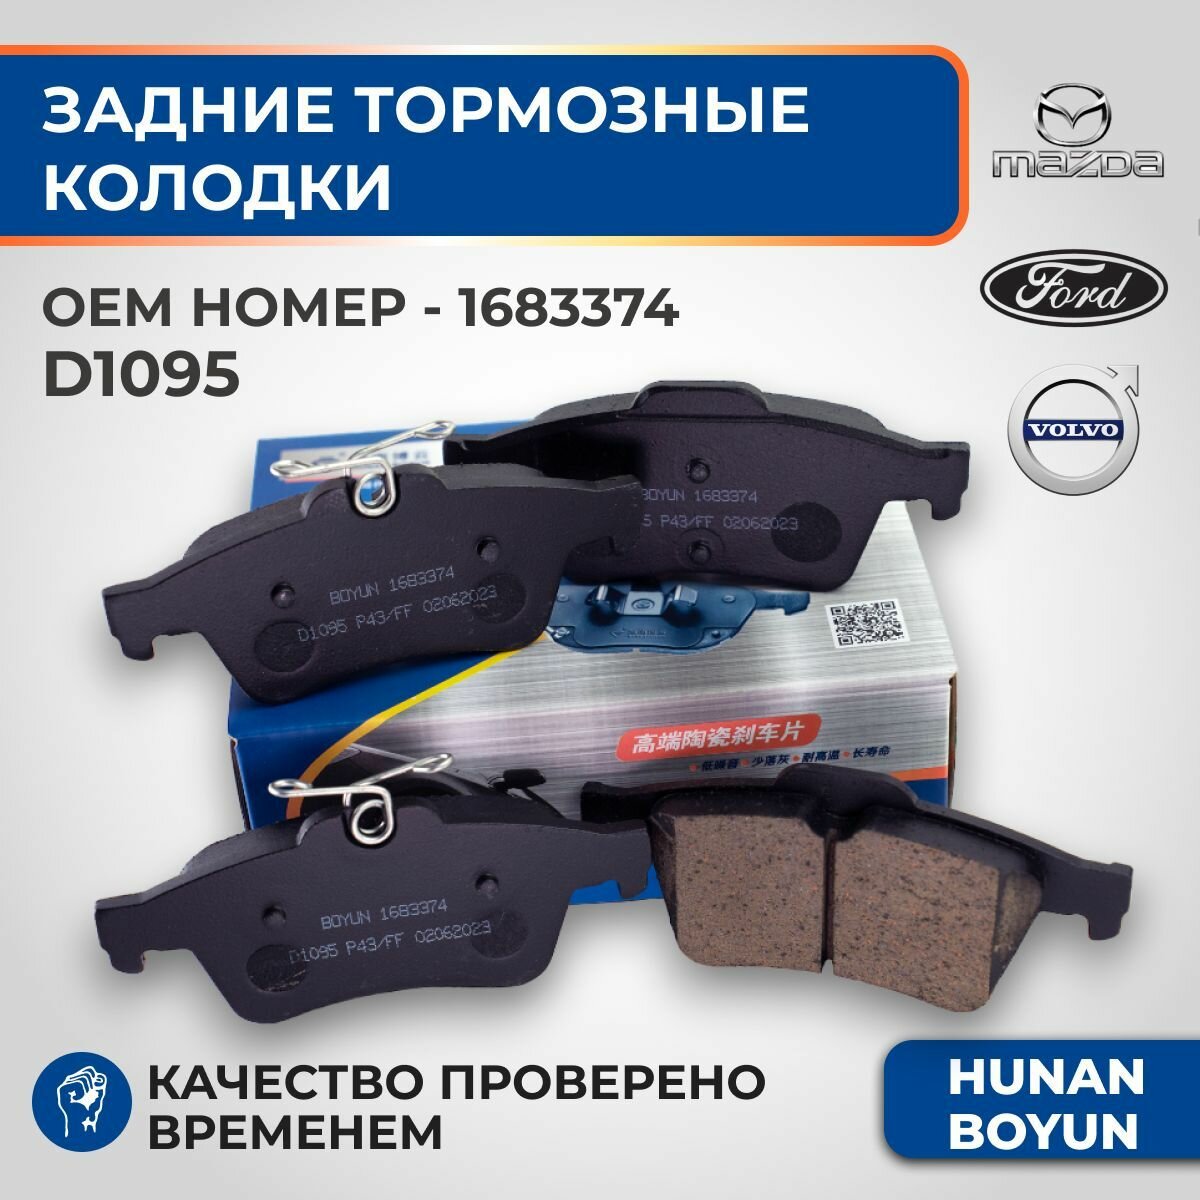 Задние тормозные колодки для Ford Focus (2004+), Kuga II, Transit 2.2D, Volvo V50, S40 II, Mazda 3 - 1683374